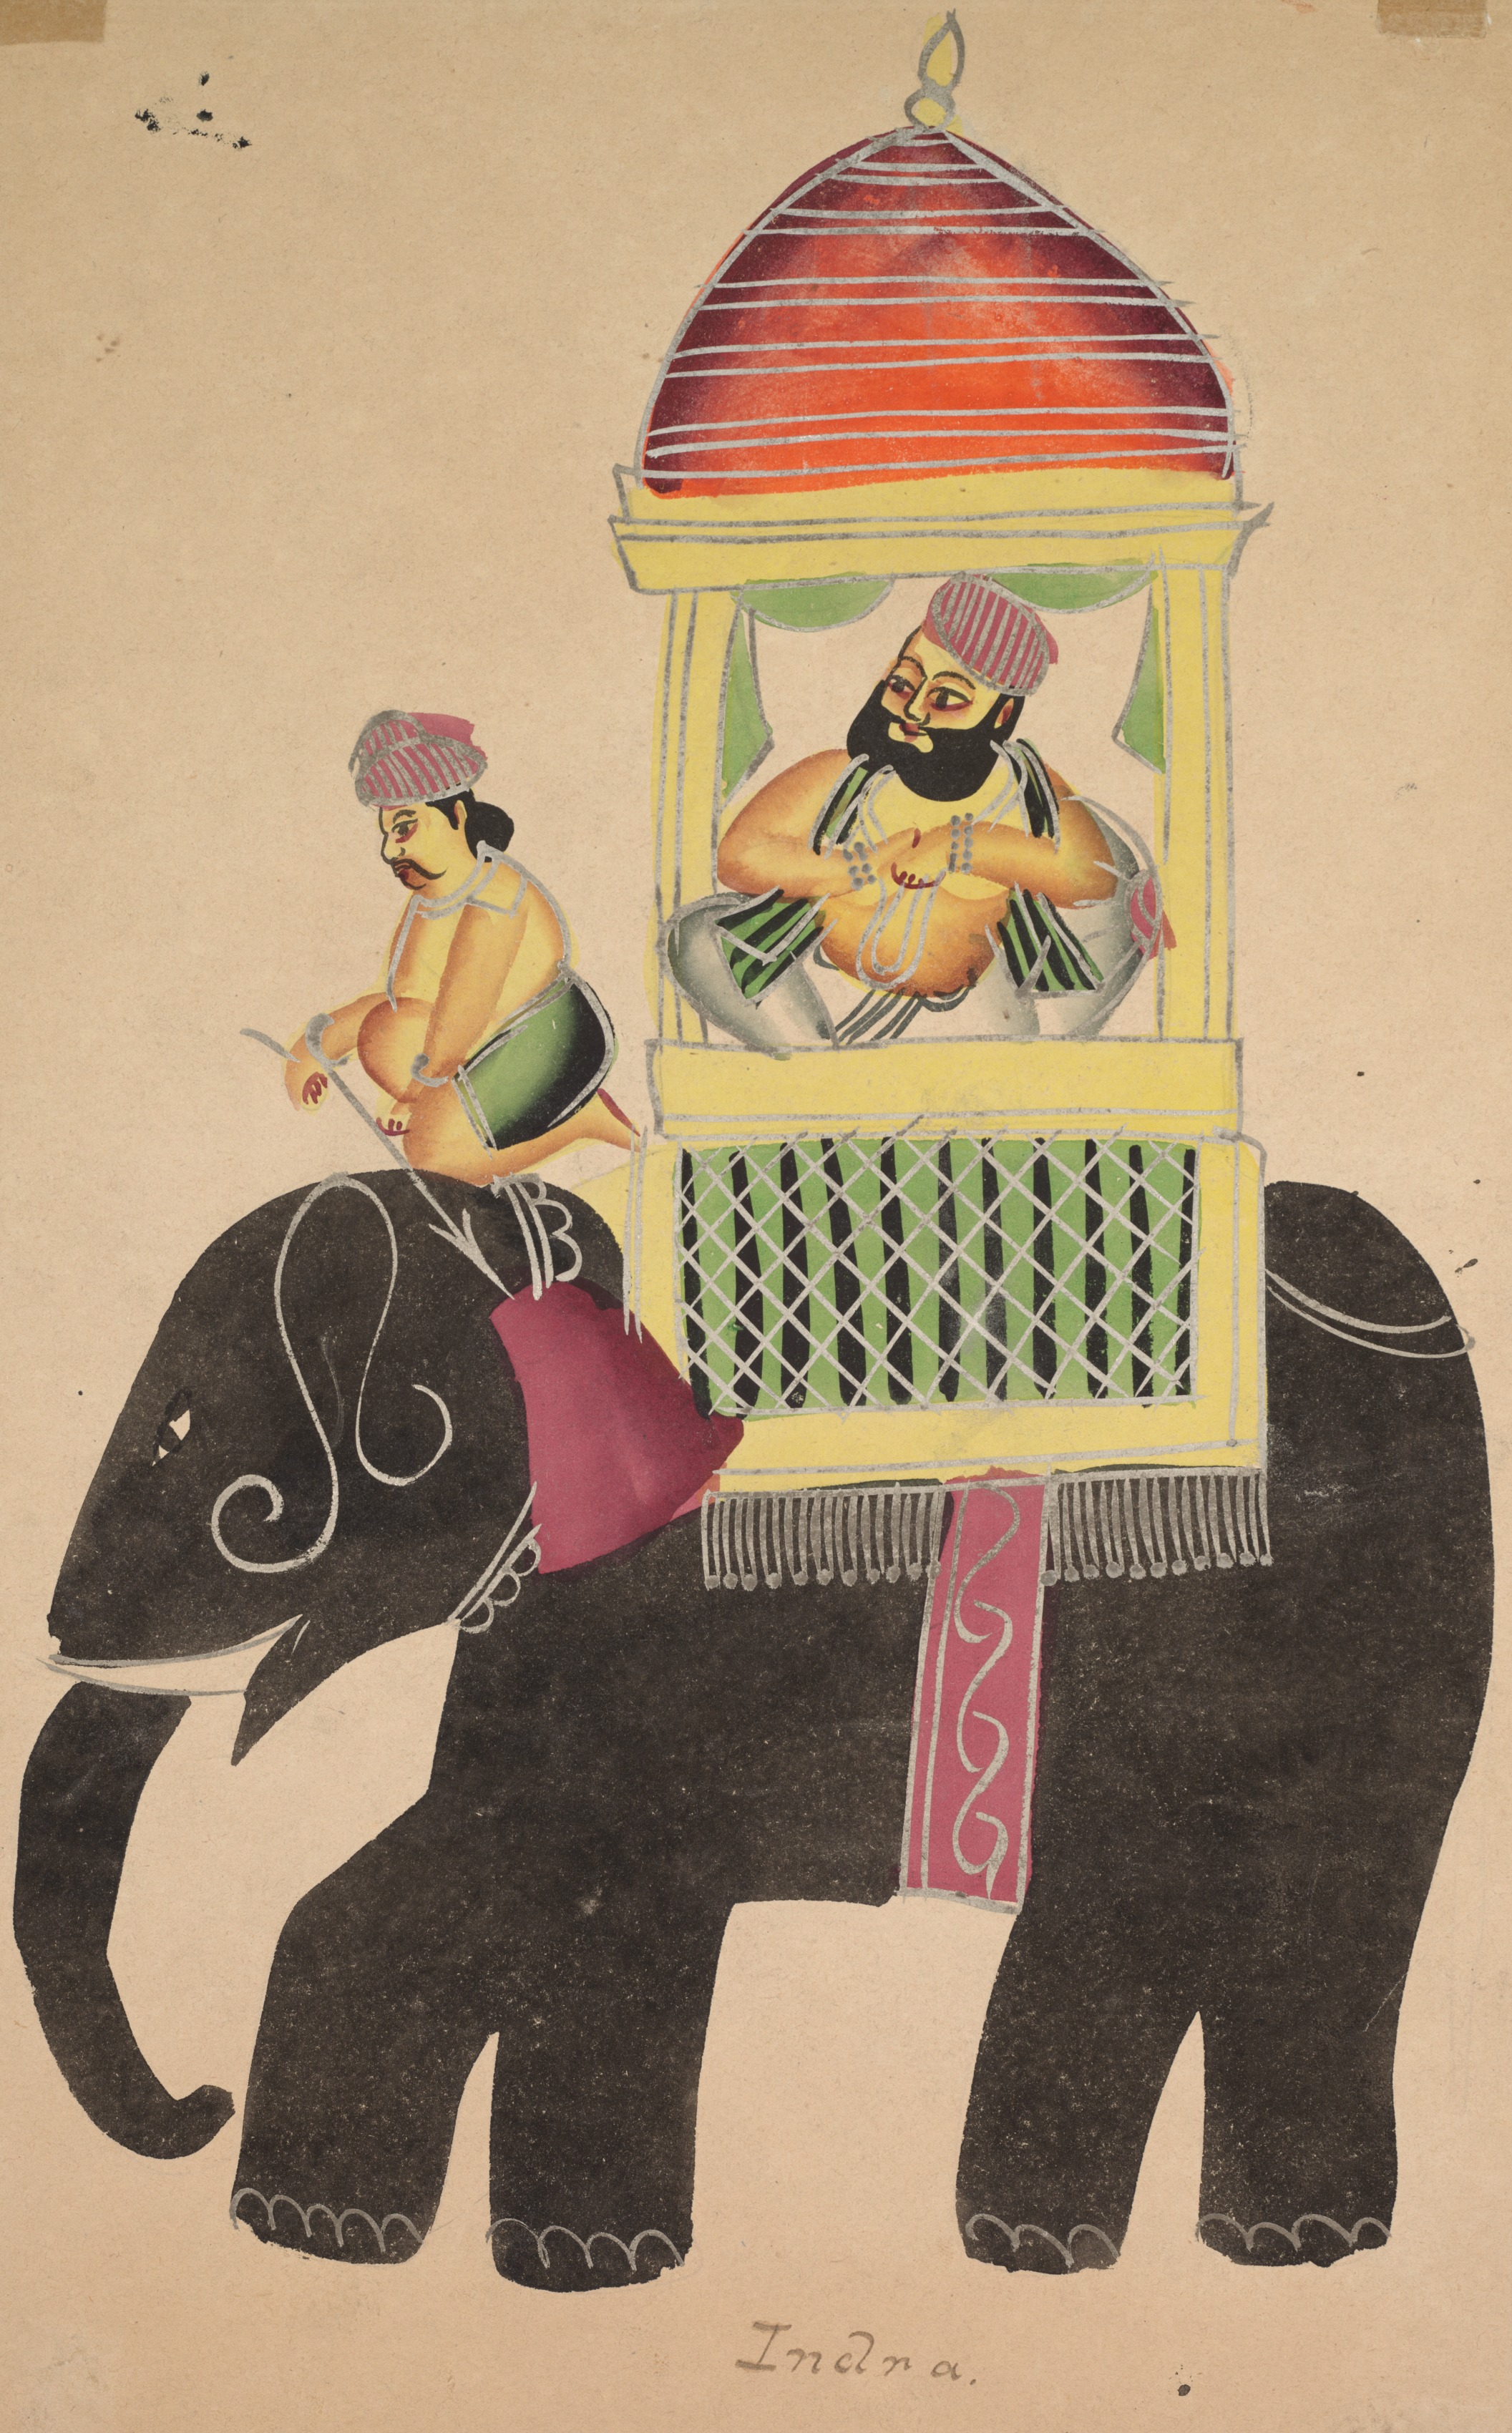 Mahant of Tarakeshwar Rides on an Elephant